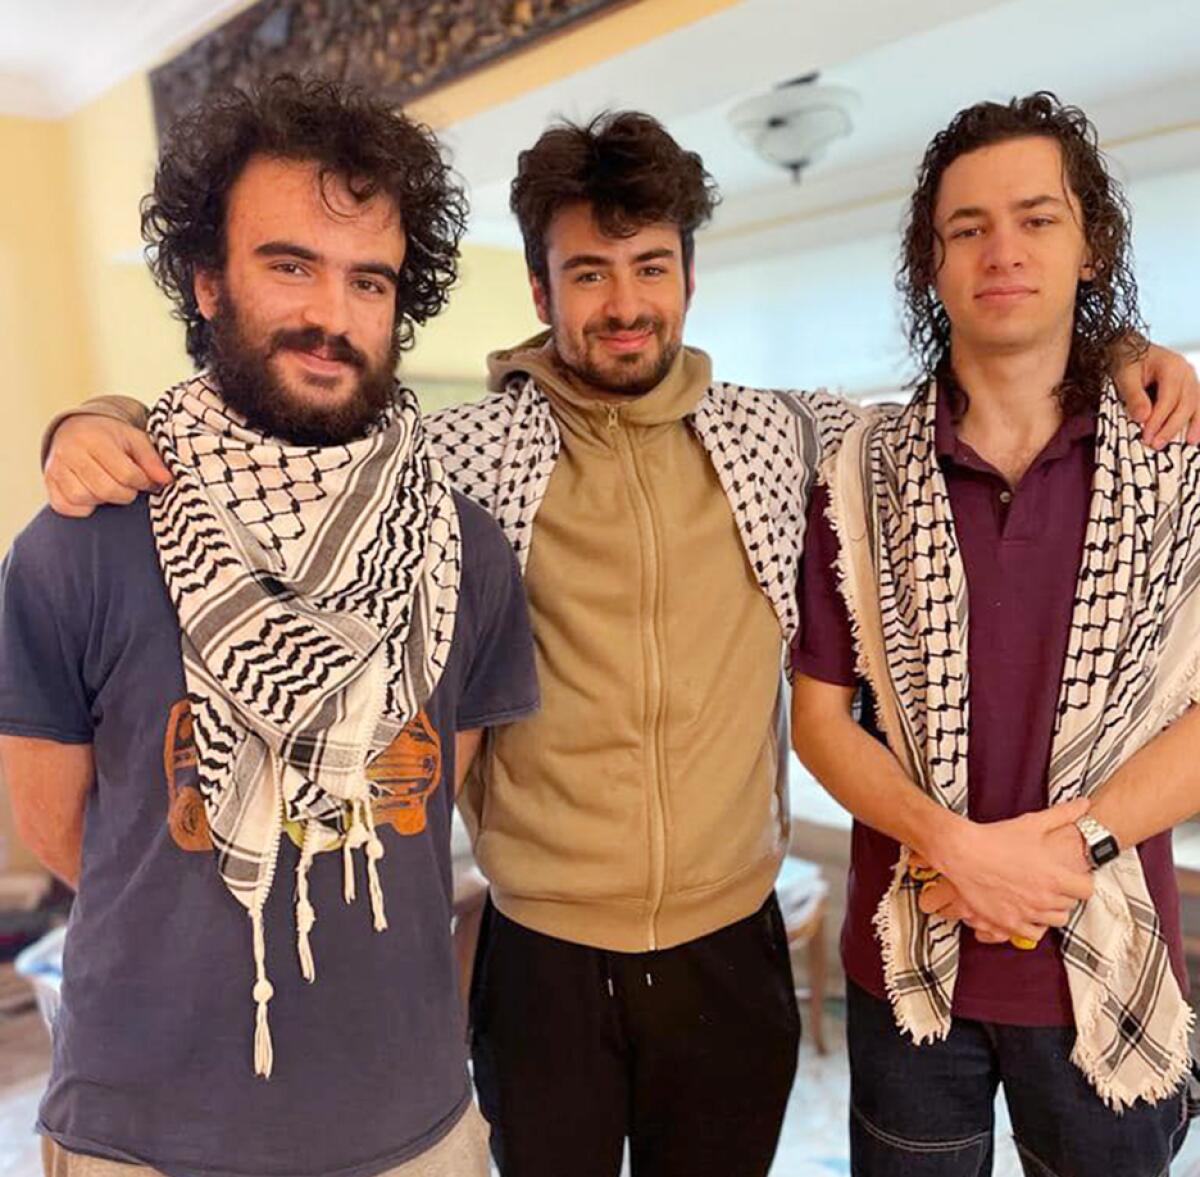 Three young men wearing keffiyeh scarves